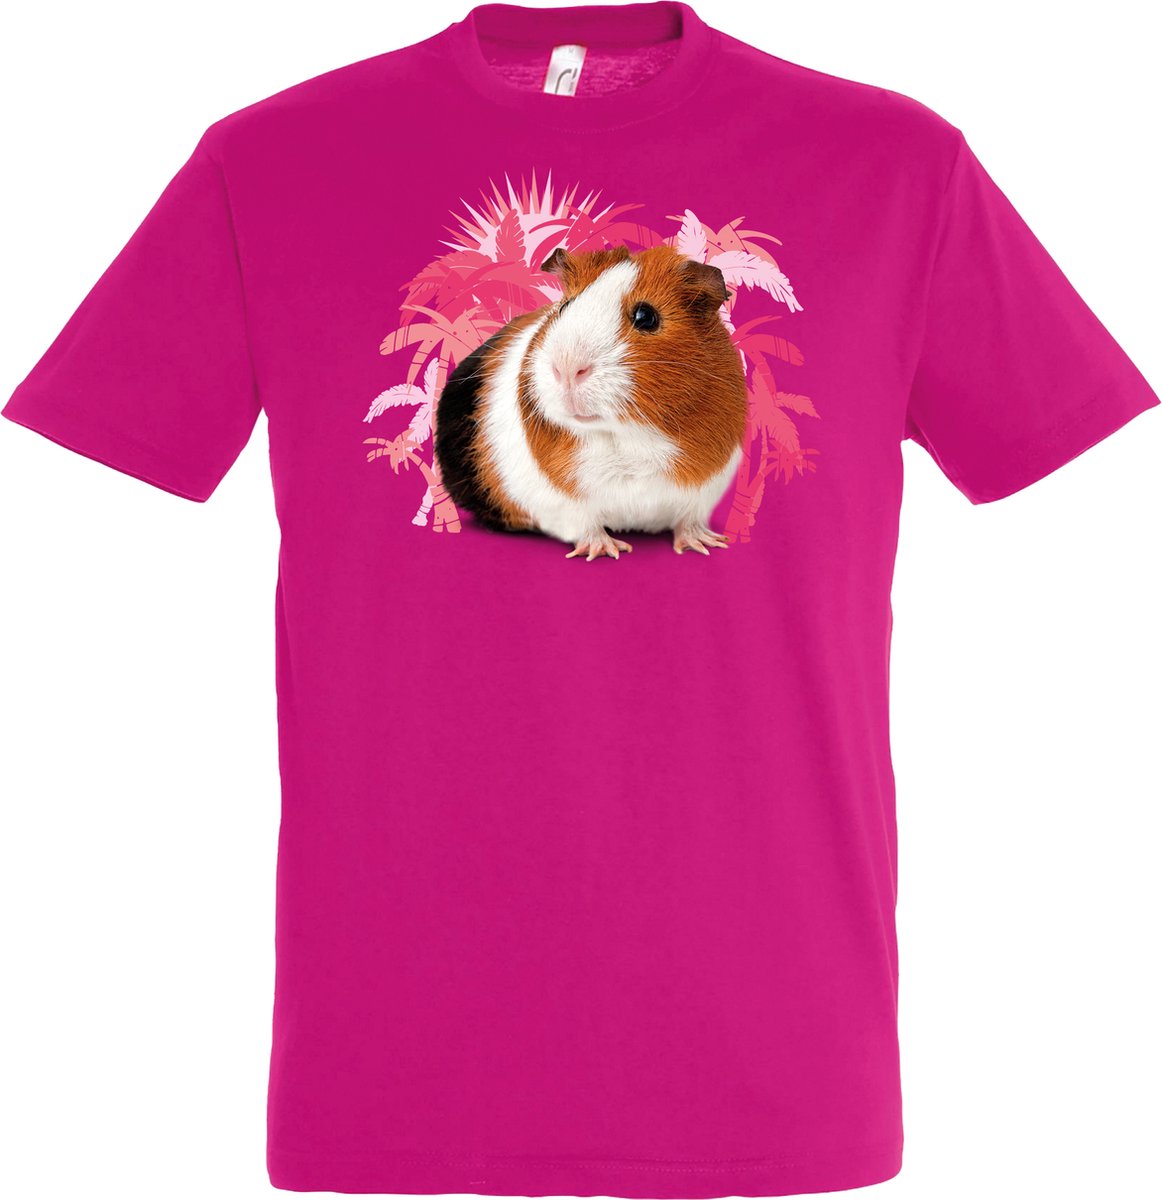 Plenty Gifts T-shirt Guinea Pigs Fuchsia L